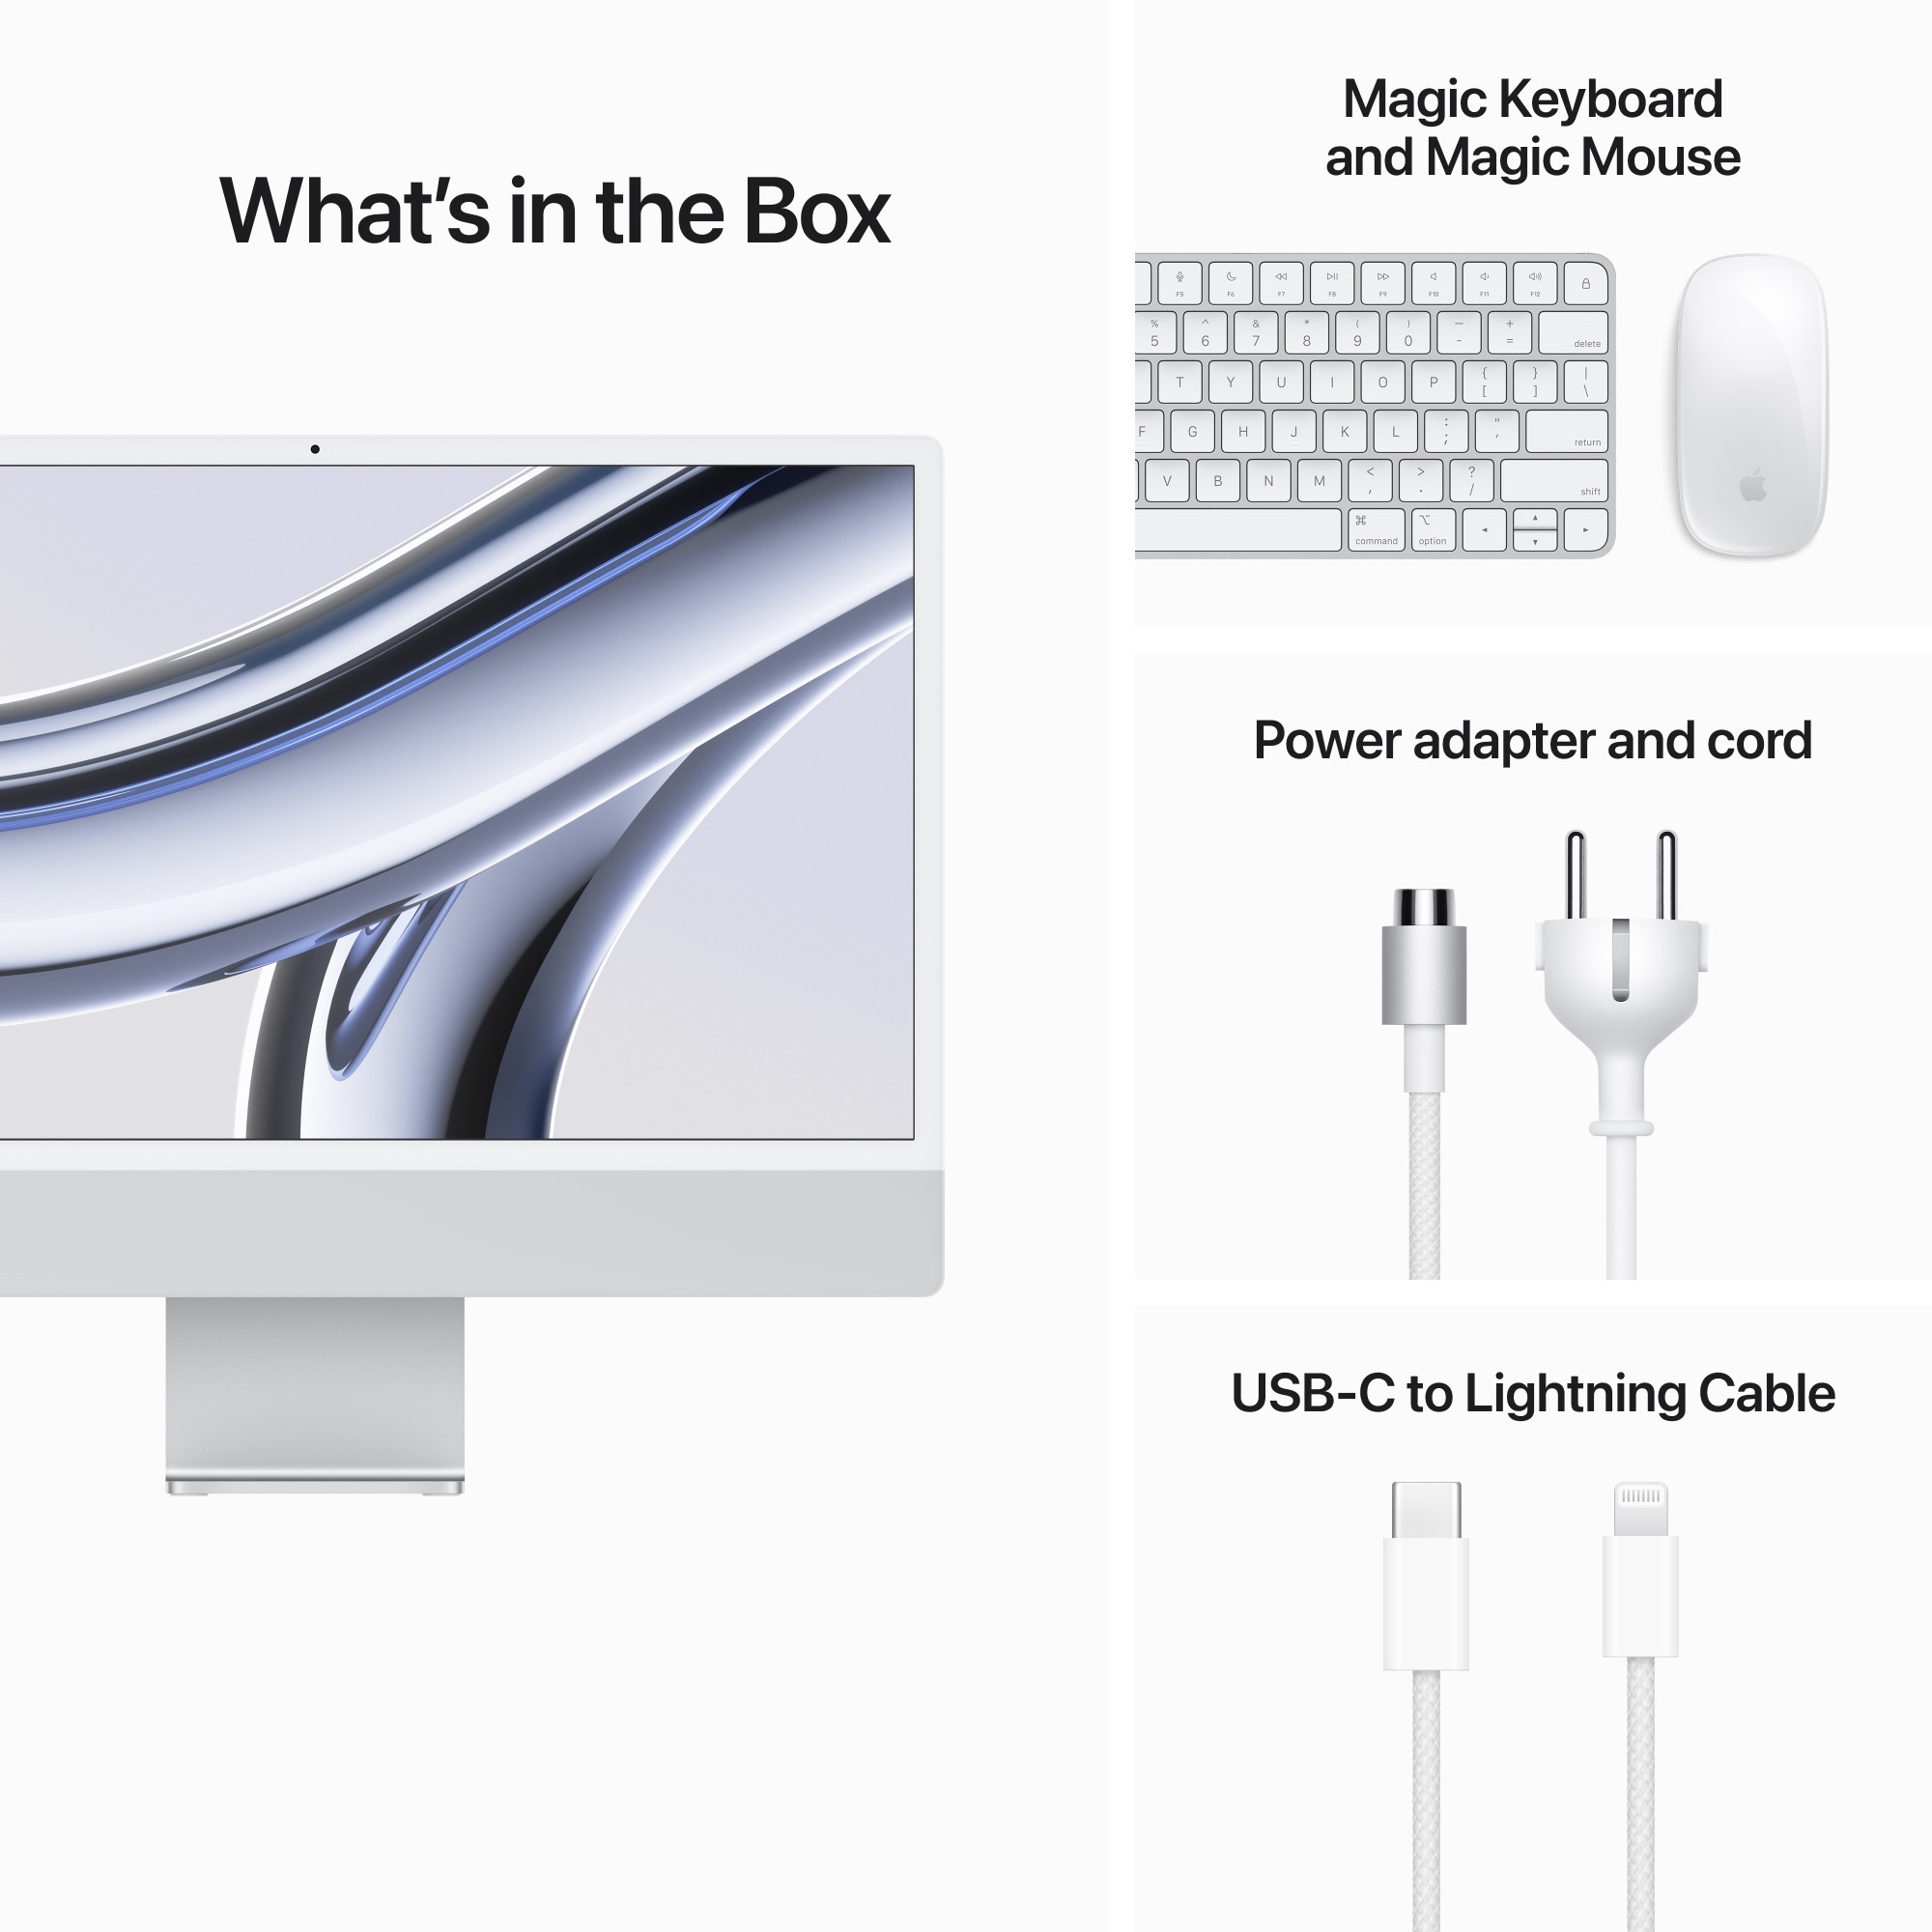 24-inch iMac 4.5K Retina kijelzővel, M3 chippel, 8 magos CPU, 8 magos GPU, 256GB SSD - ezüst